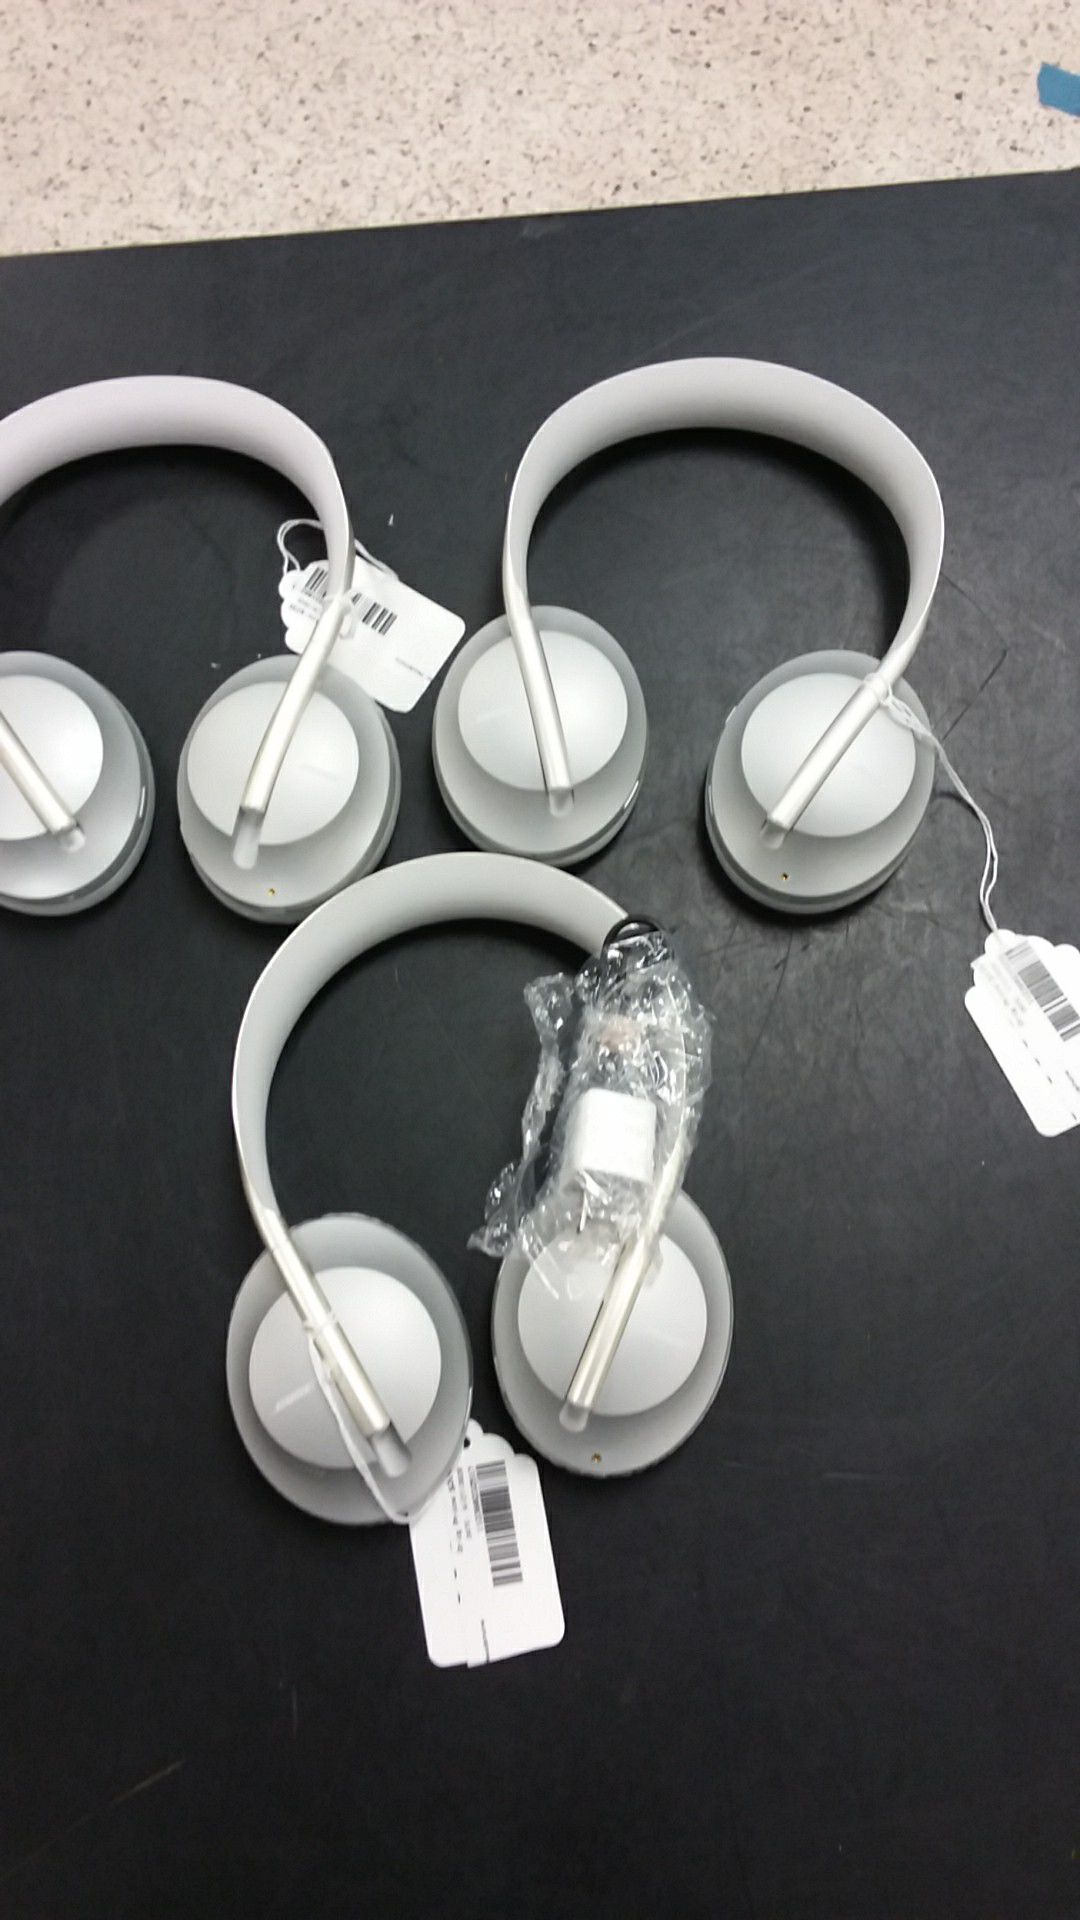 Bose 700 Noise canceling headphones